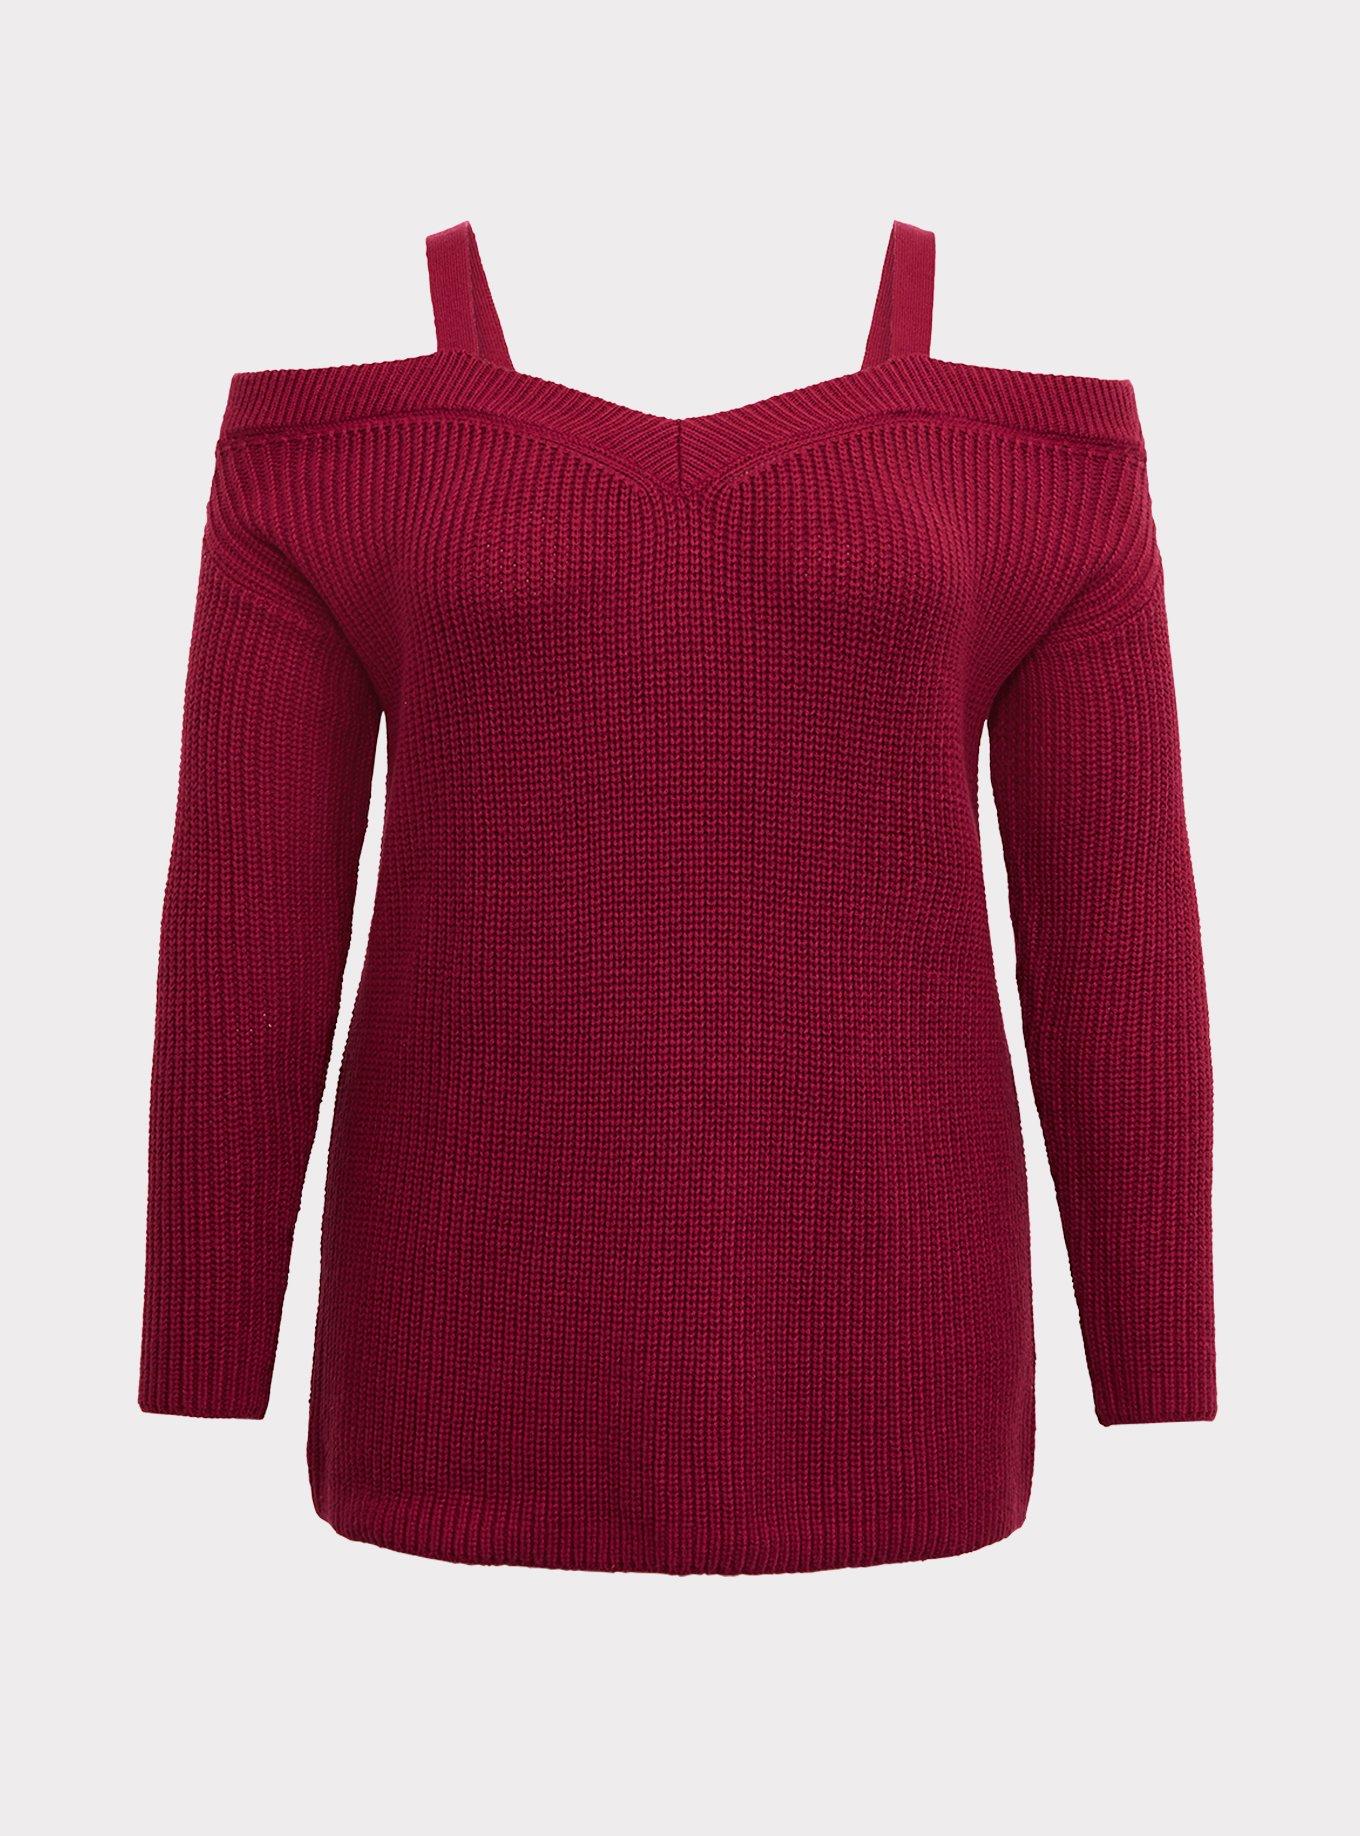 TORRID Red Super Soft Knit Mock Neck Tunic Sweater Blouse Plus Size 3X